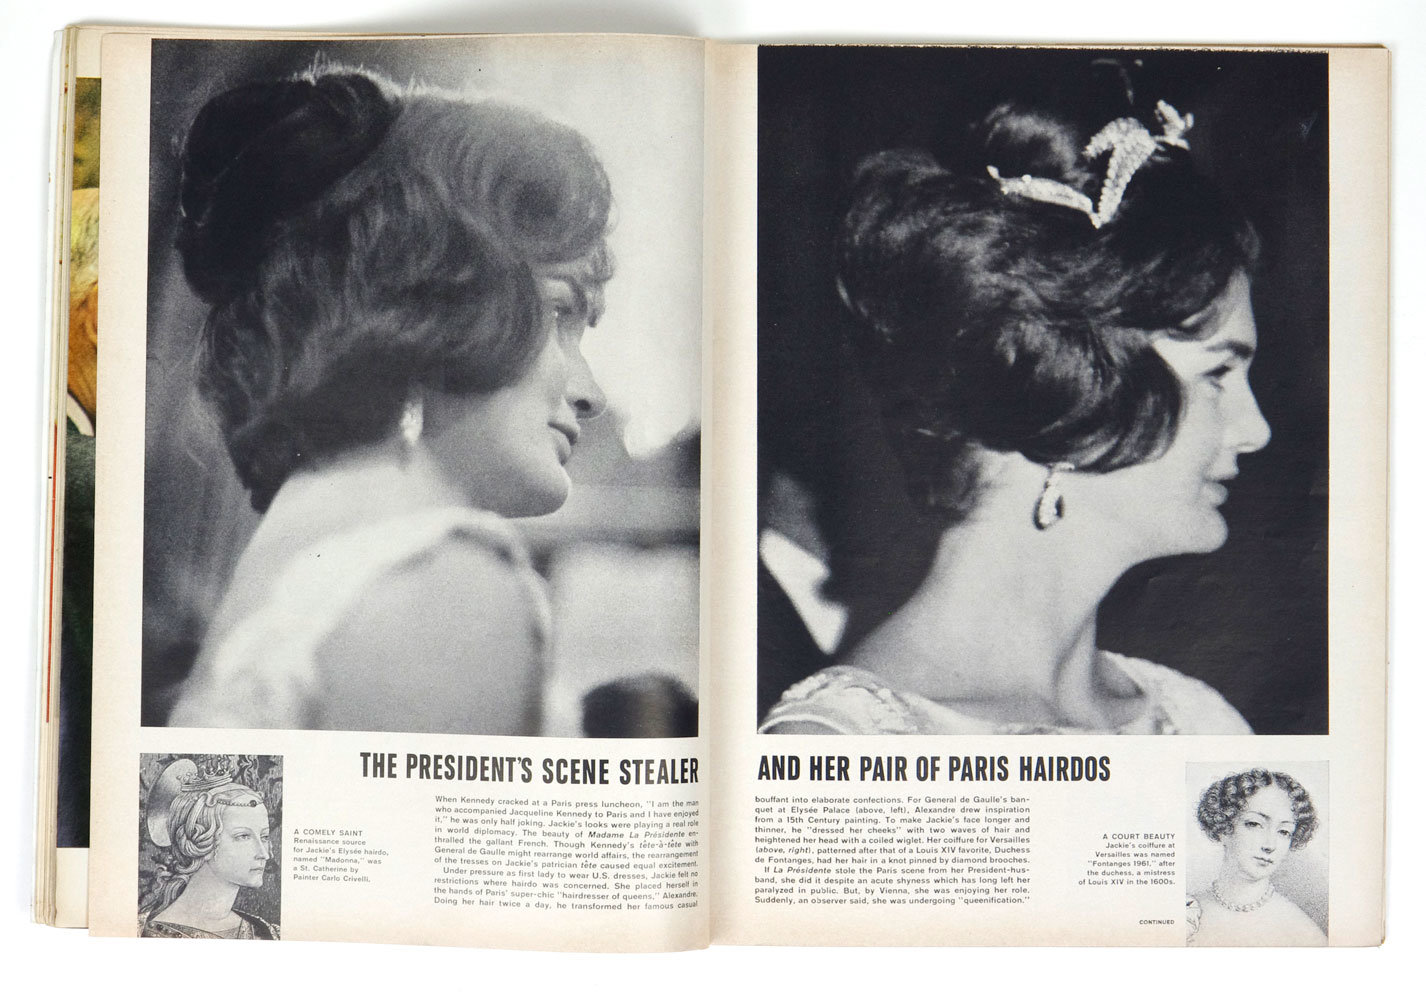 LIFE Magazine Back Issue 1961 June 9 John F Kennedy in Paris